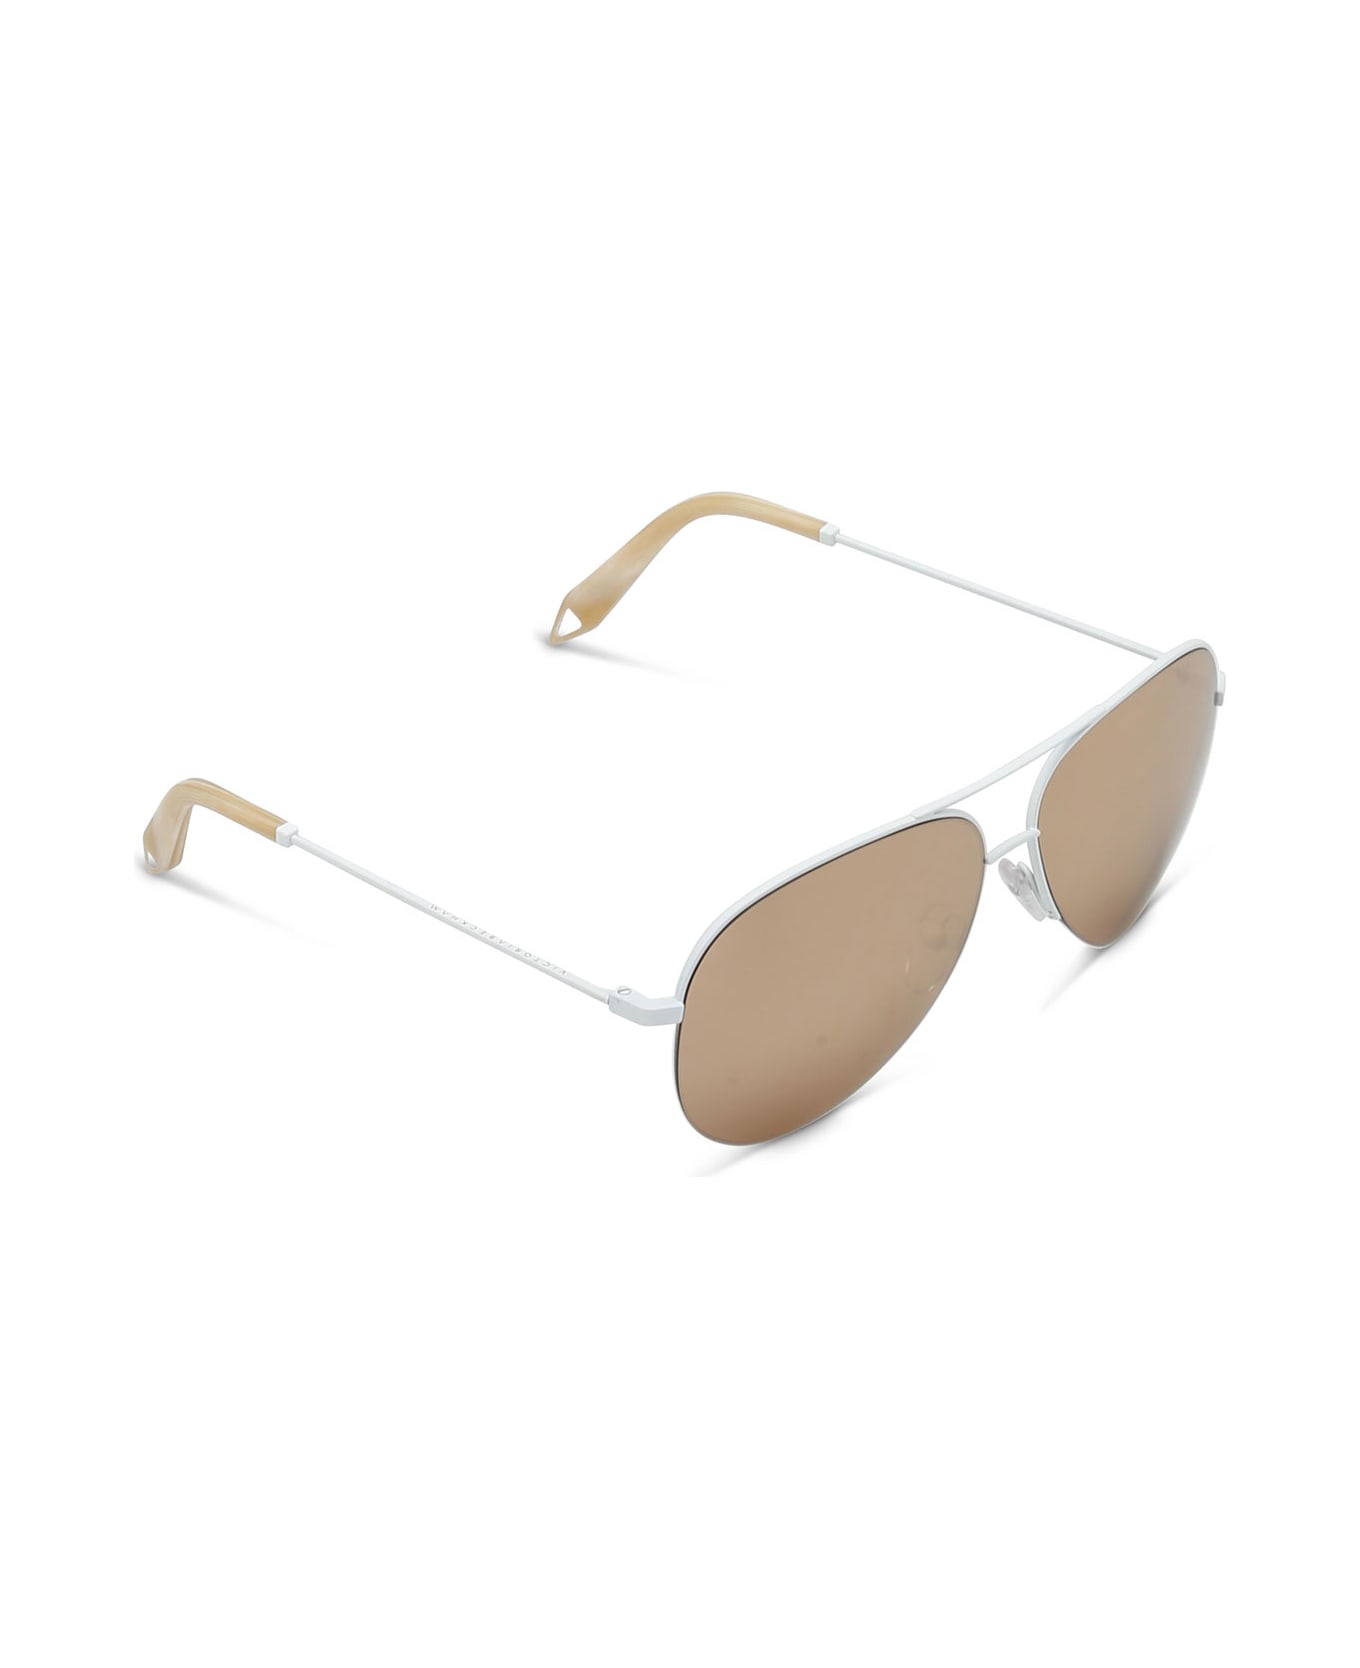 Victoria Beckham VBS100 C18 Sunglasses - Ct Gold Mi サングラス